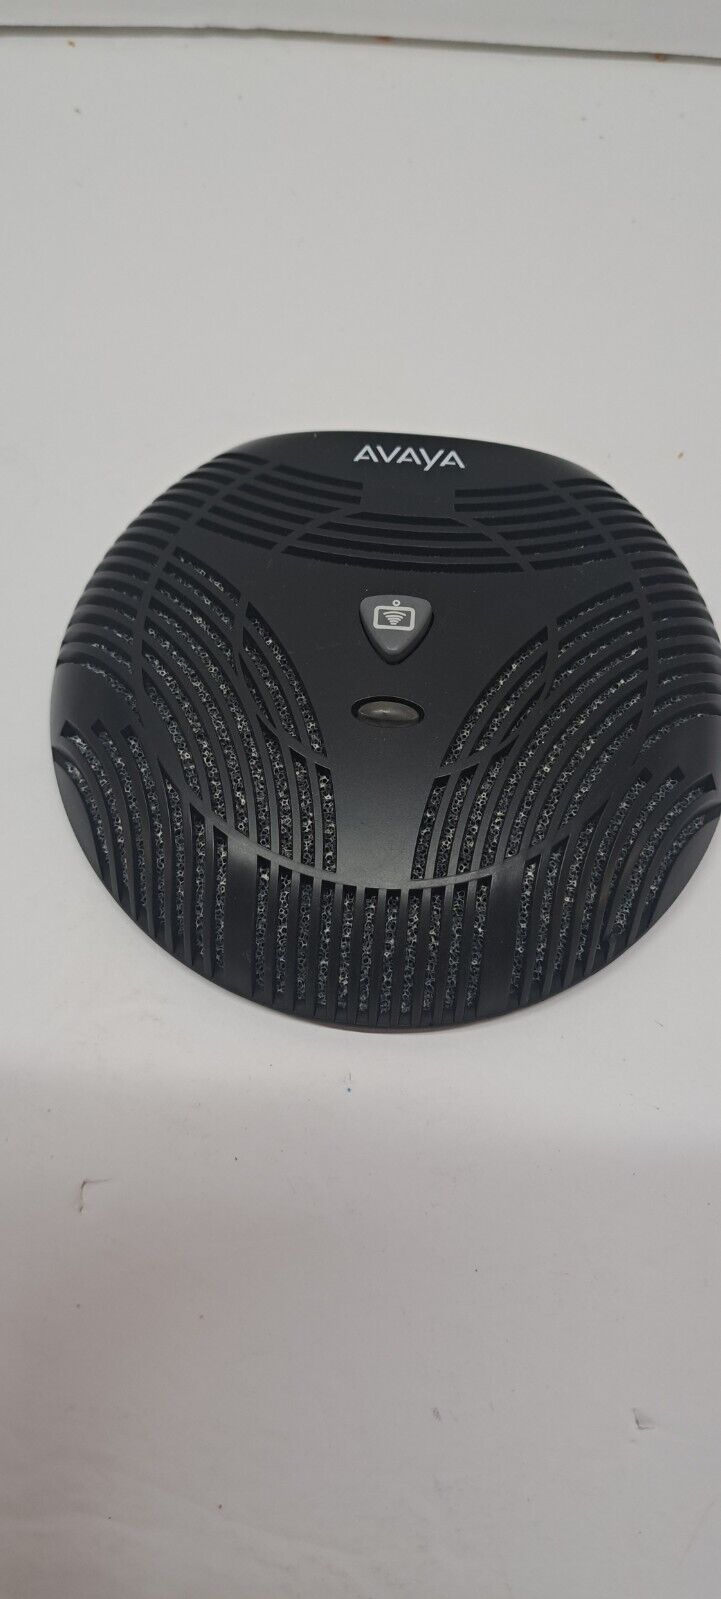 Avaya Radvision Device Pod Hi-Band Video Conferencing Microphone 43111-00006